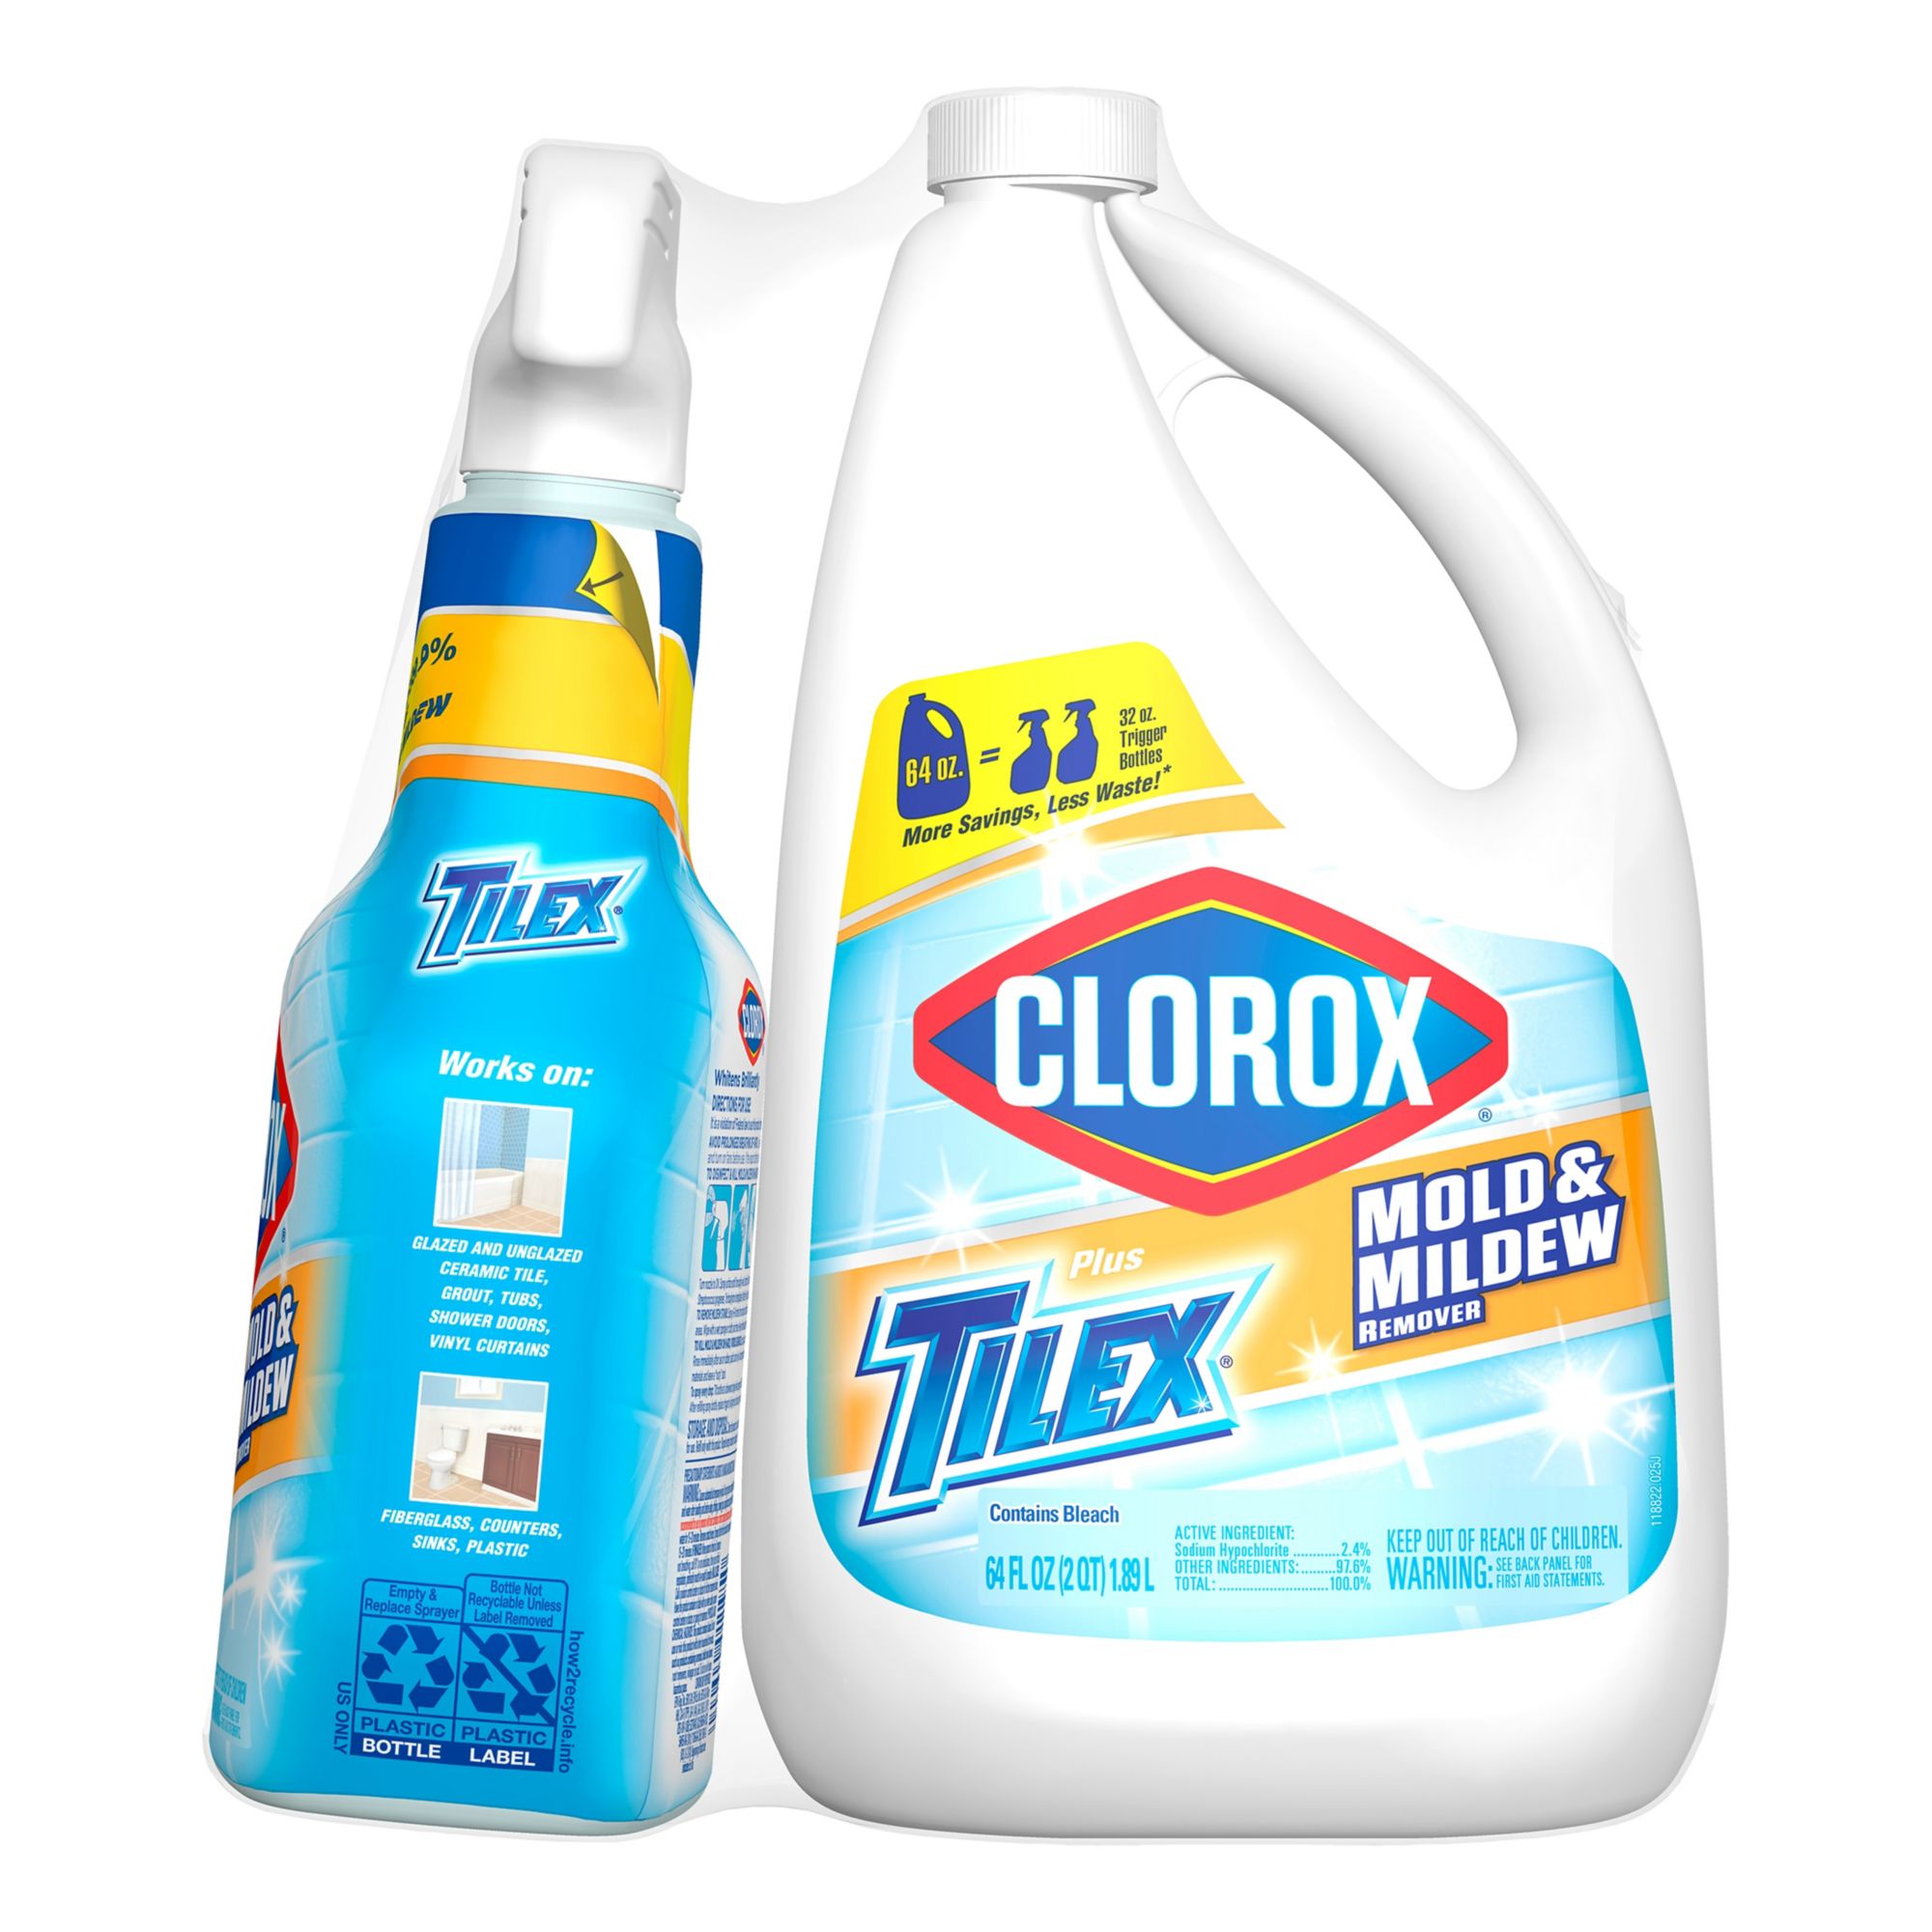 Clorox Tilex Mold & Mildew Remover, 32 oz. with 64 oz. Refill